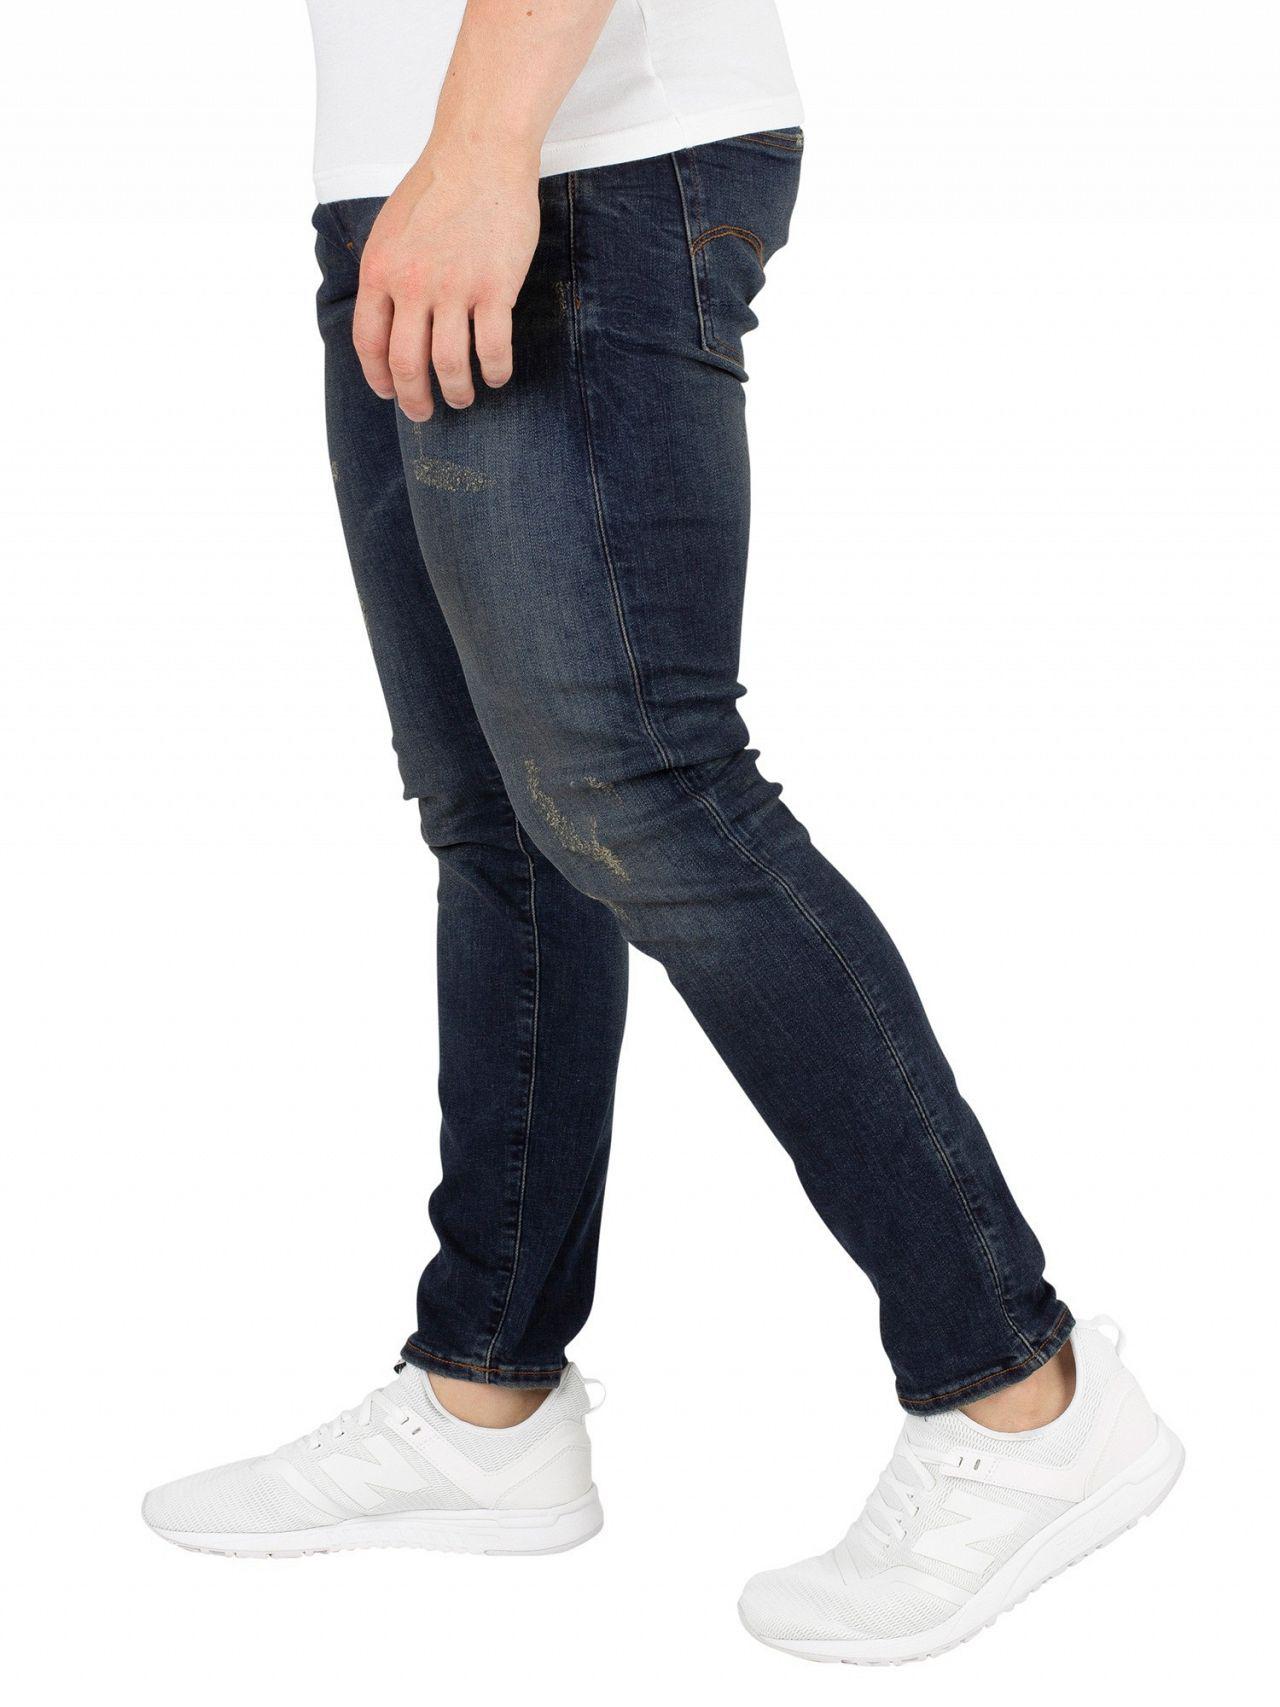 G-Star RAW Denim Dark Aged Antic Destroy 3301 Deconstructed Skinny Jeans in  Blue for Men - Lyst